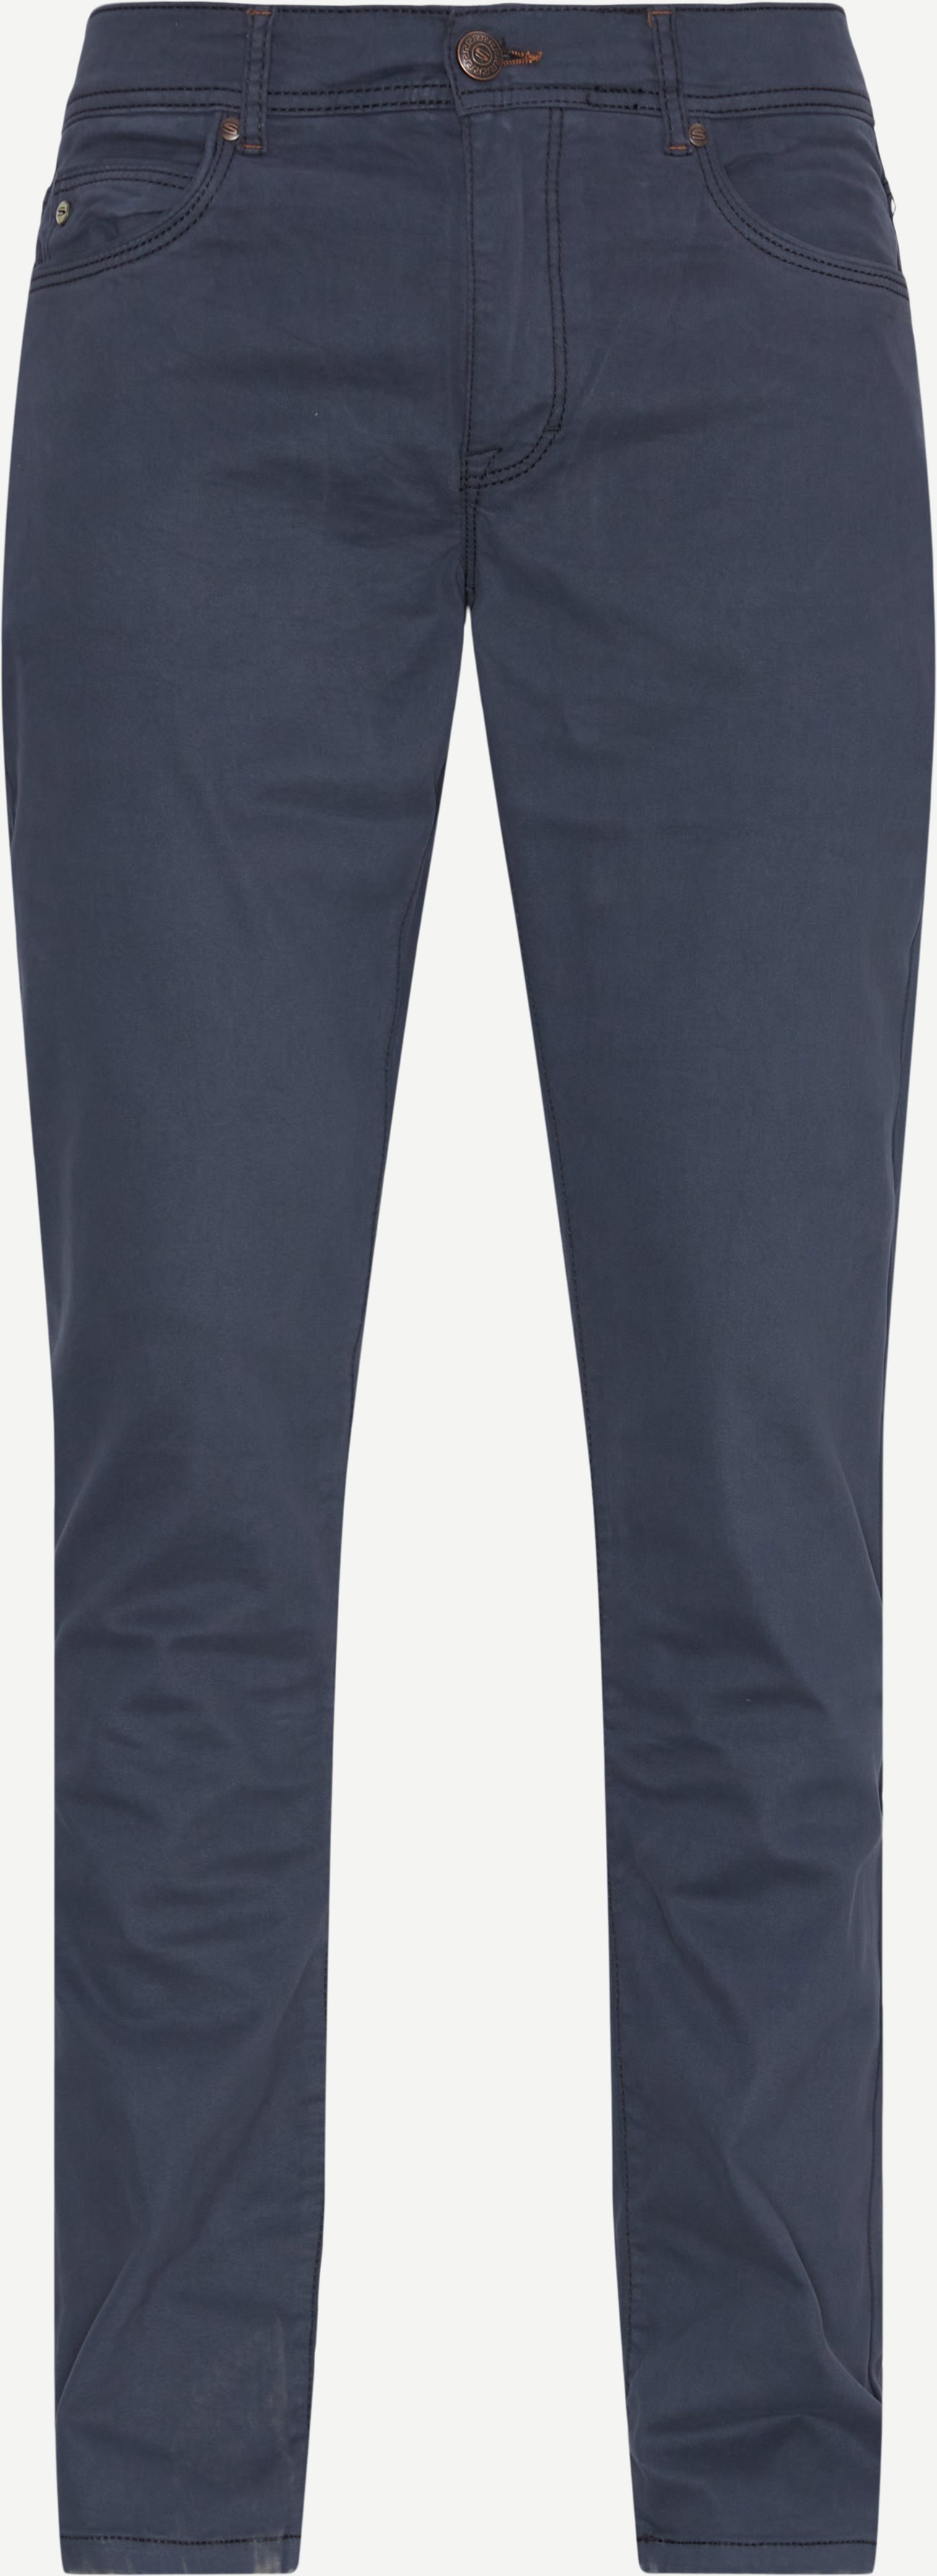 Sand Jeans SUEDE TOUCH BURTON N 2401 Blå